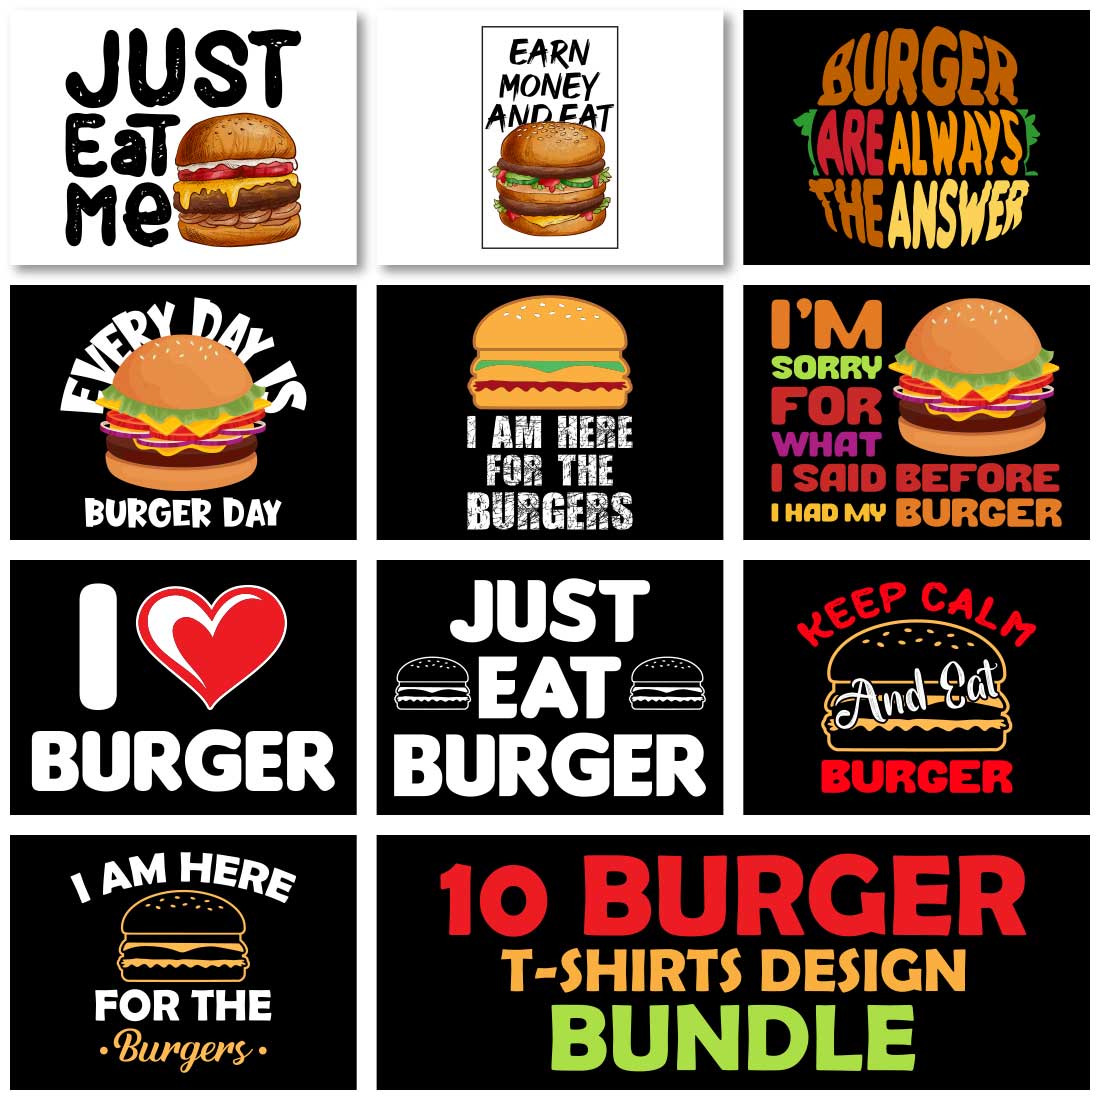 Best burger t-shirts design for burger lover preview image.